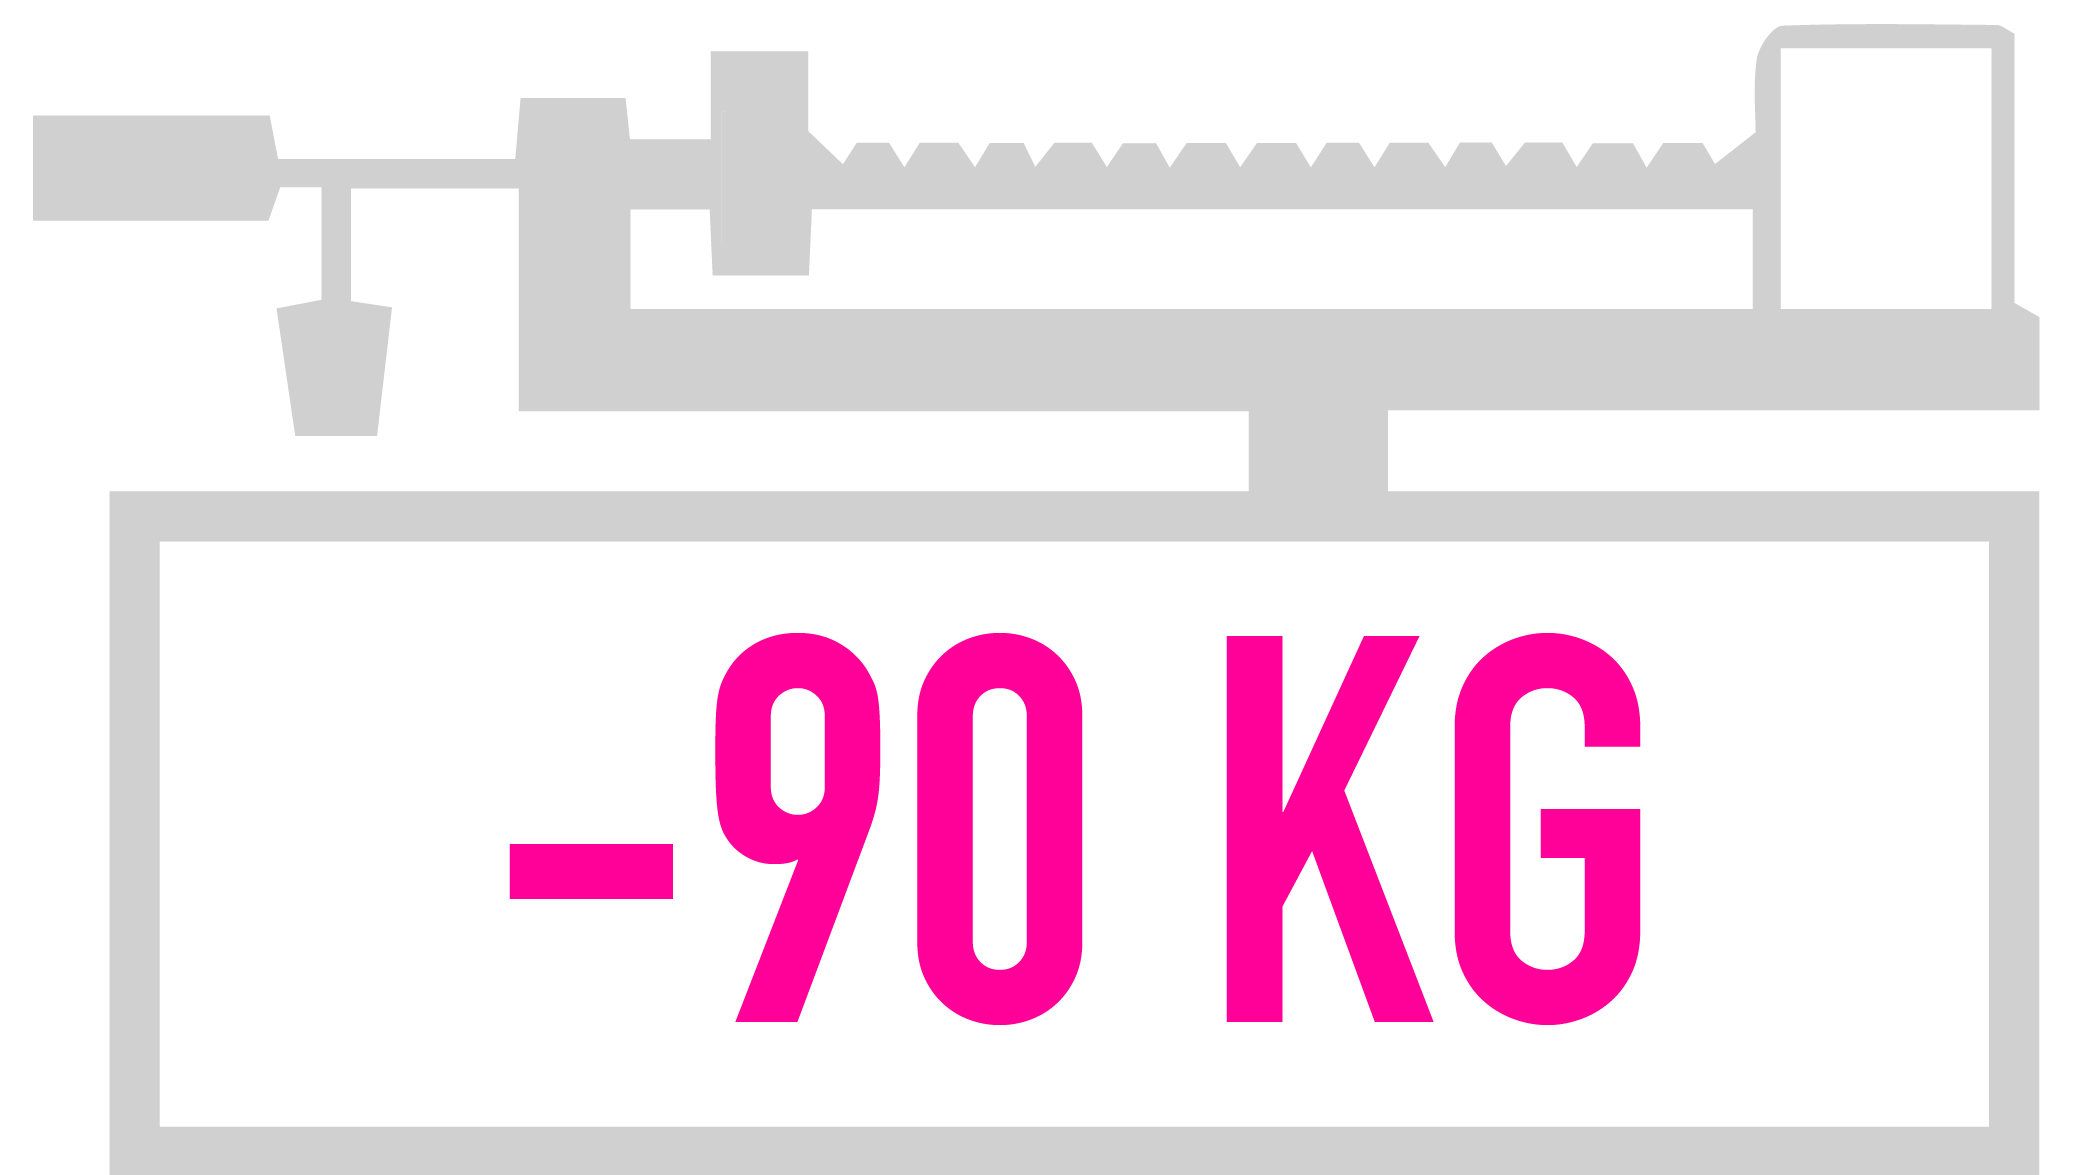  90kg 01